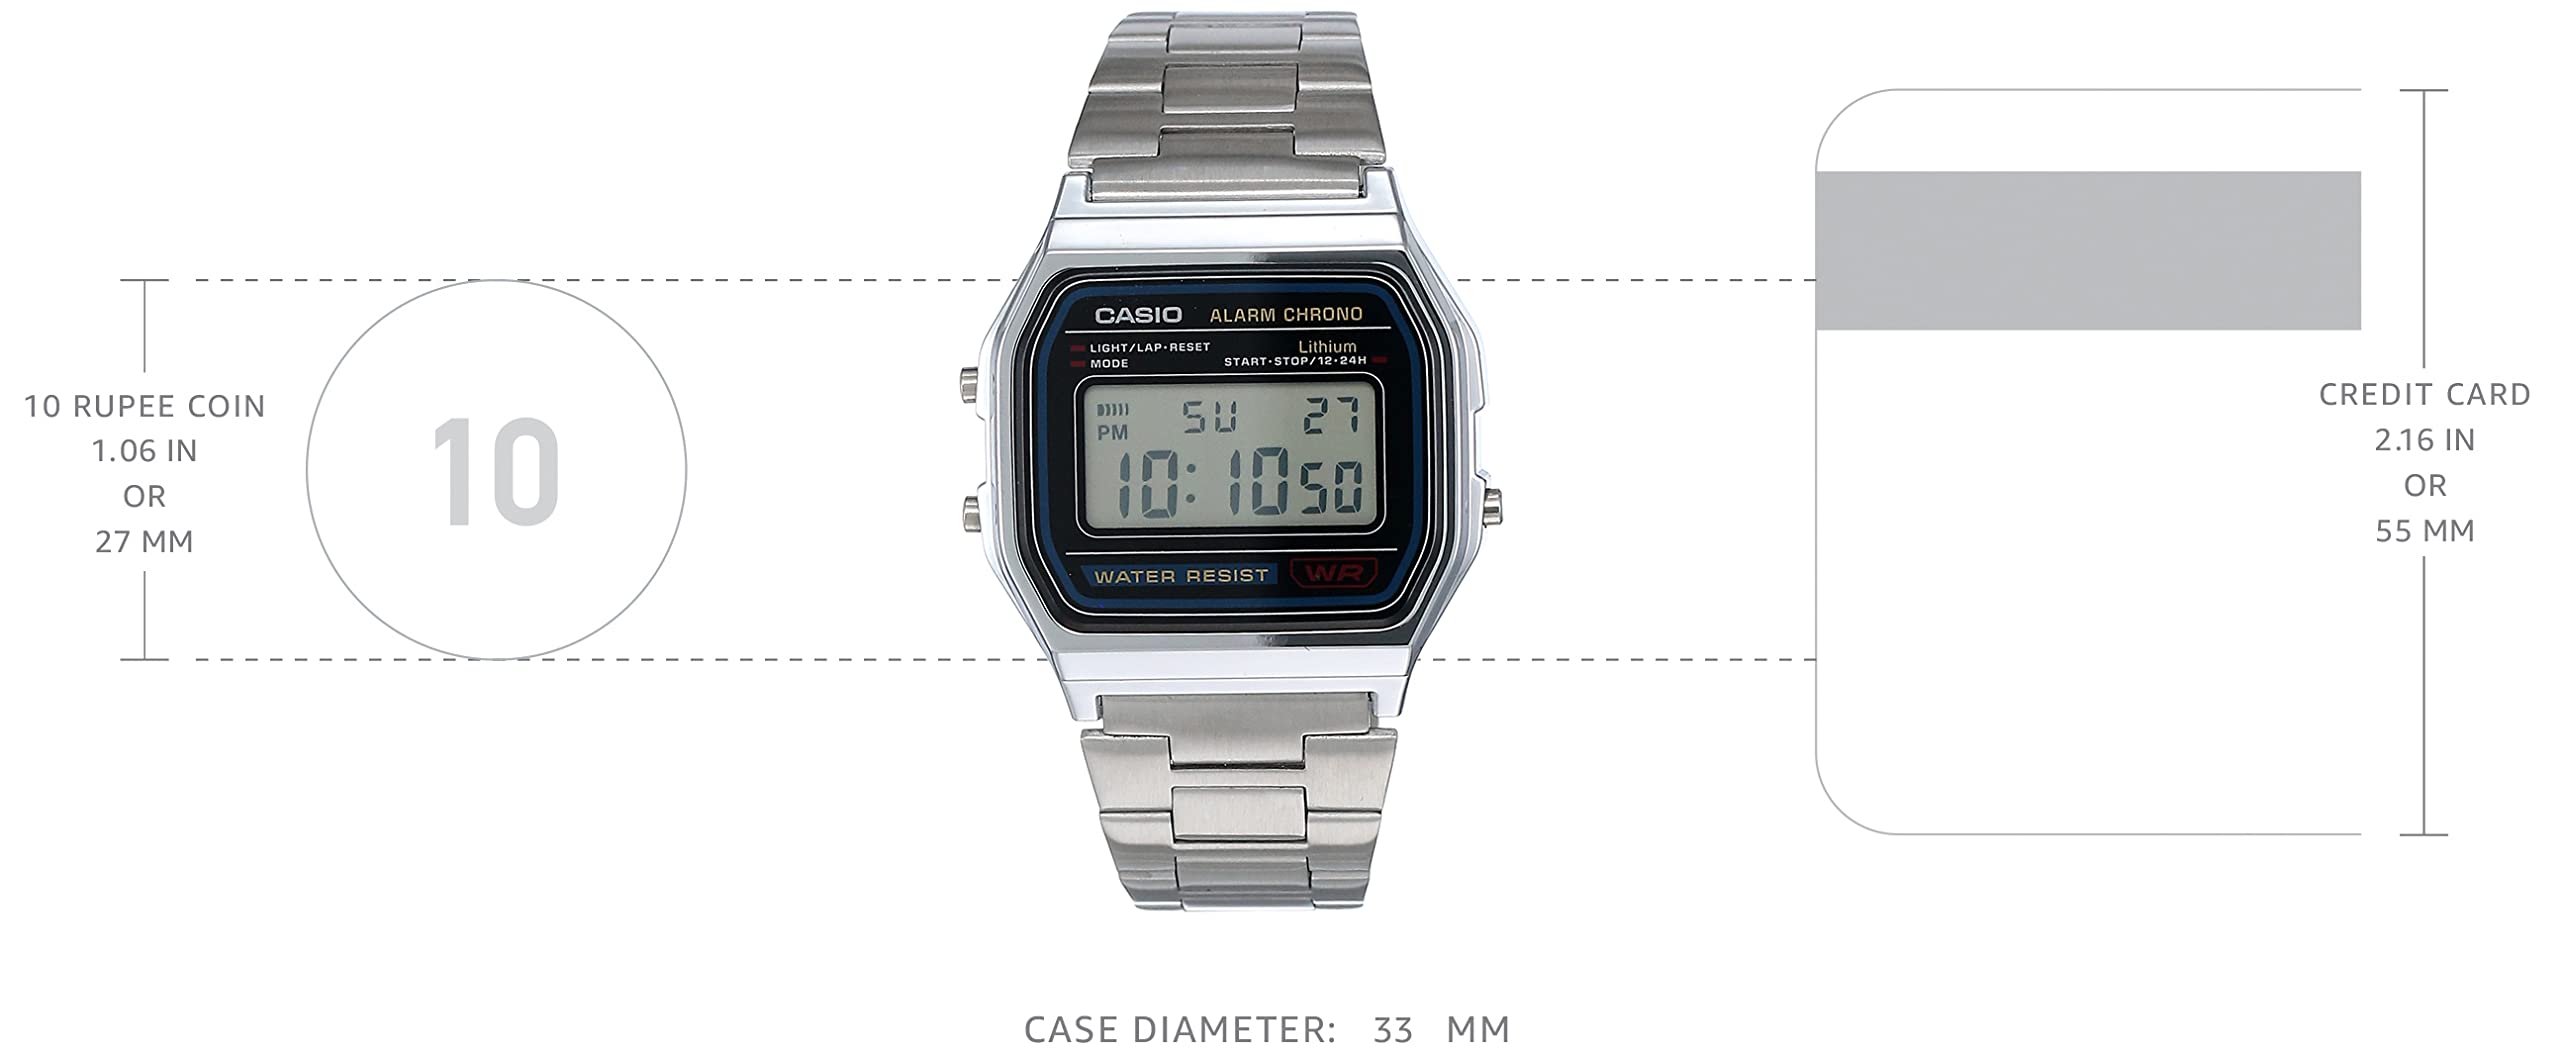 Casio Men's A158WA-1DF Stainless Steel Digital Watch